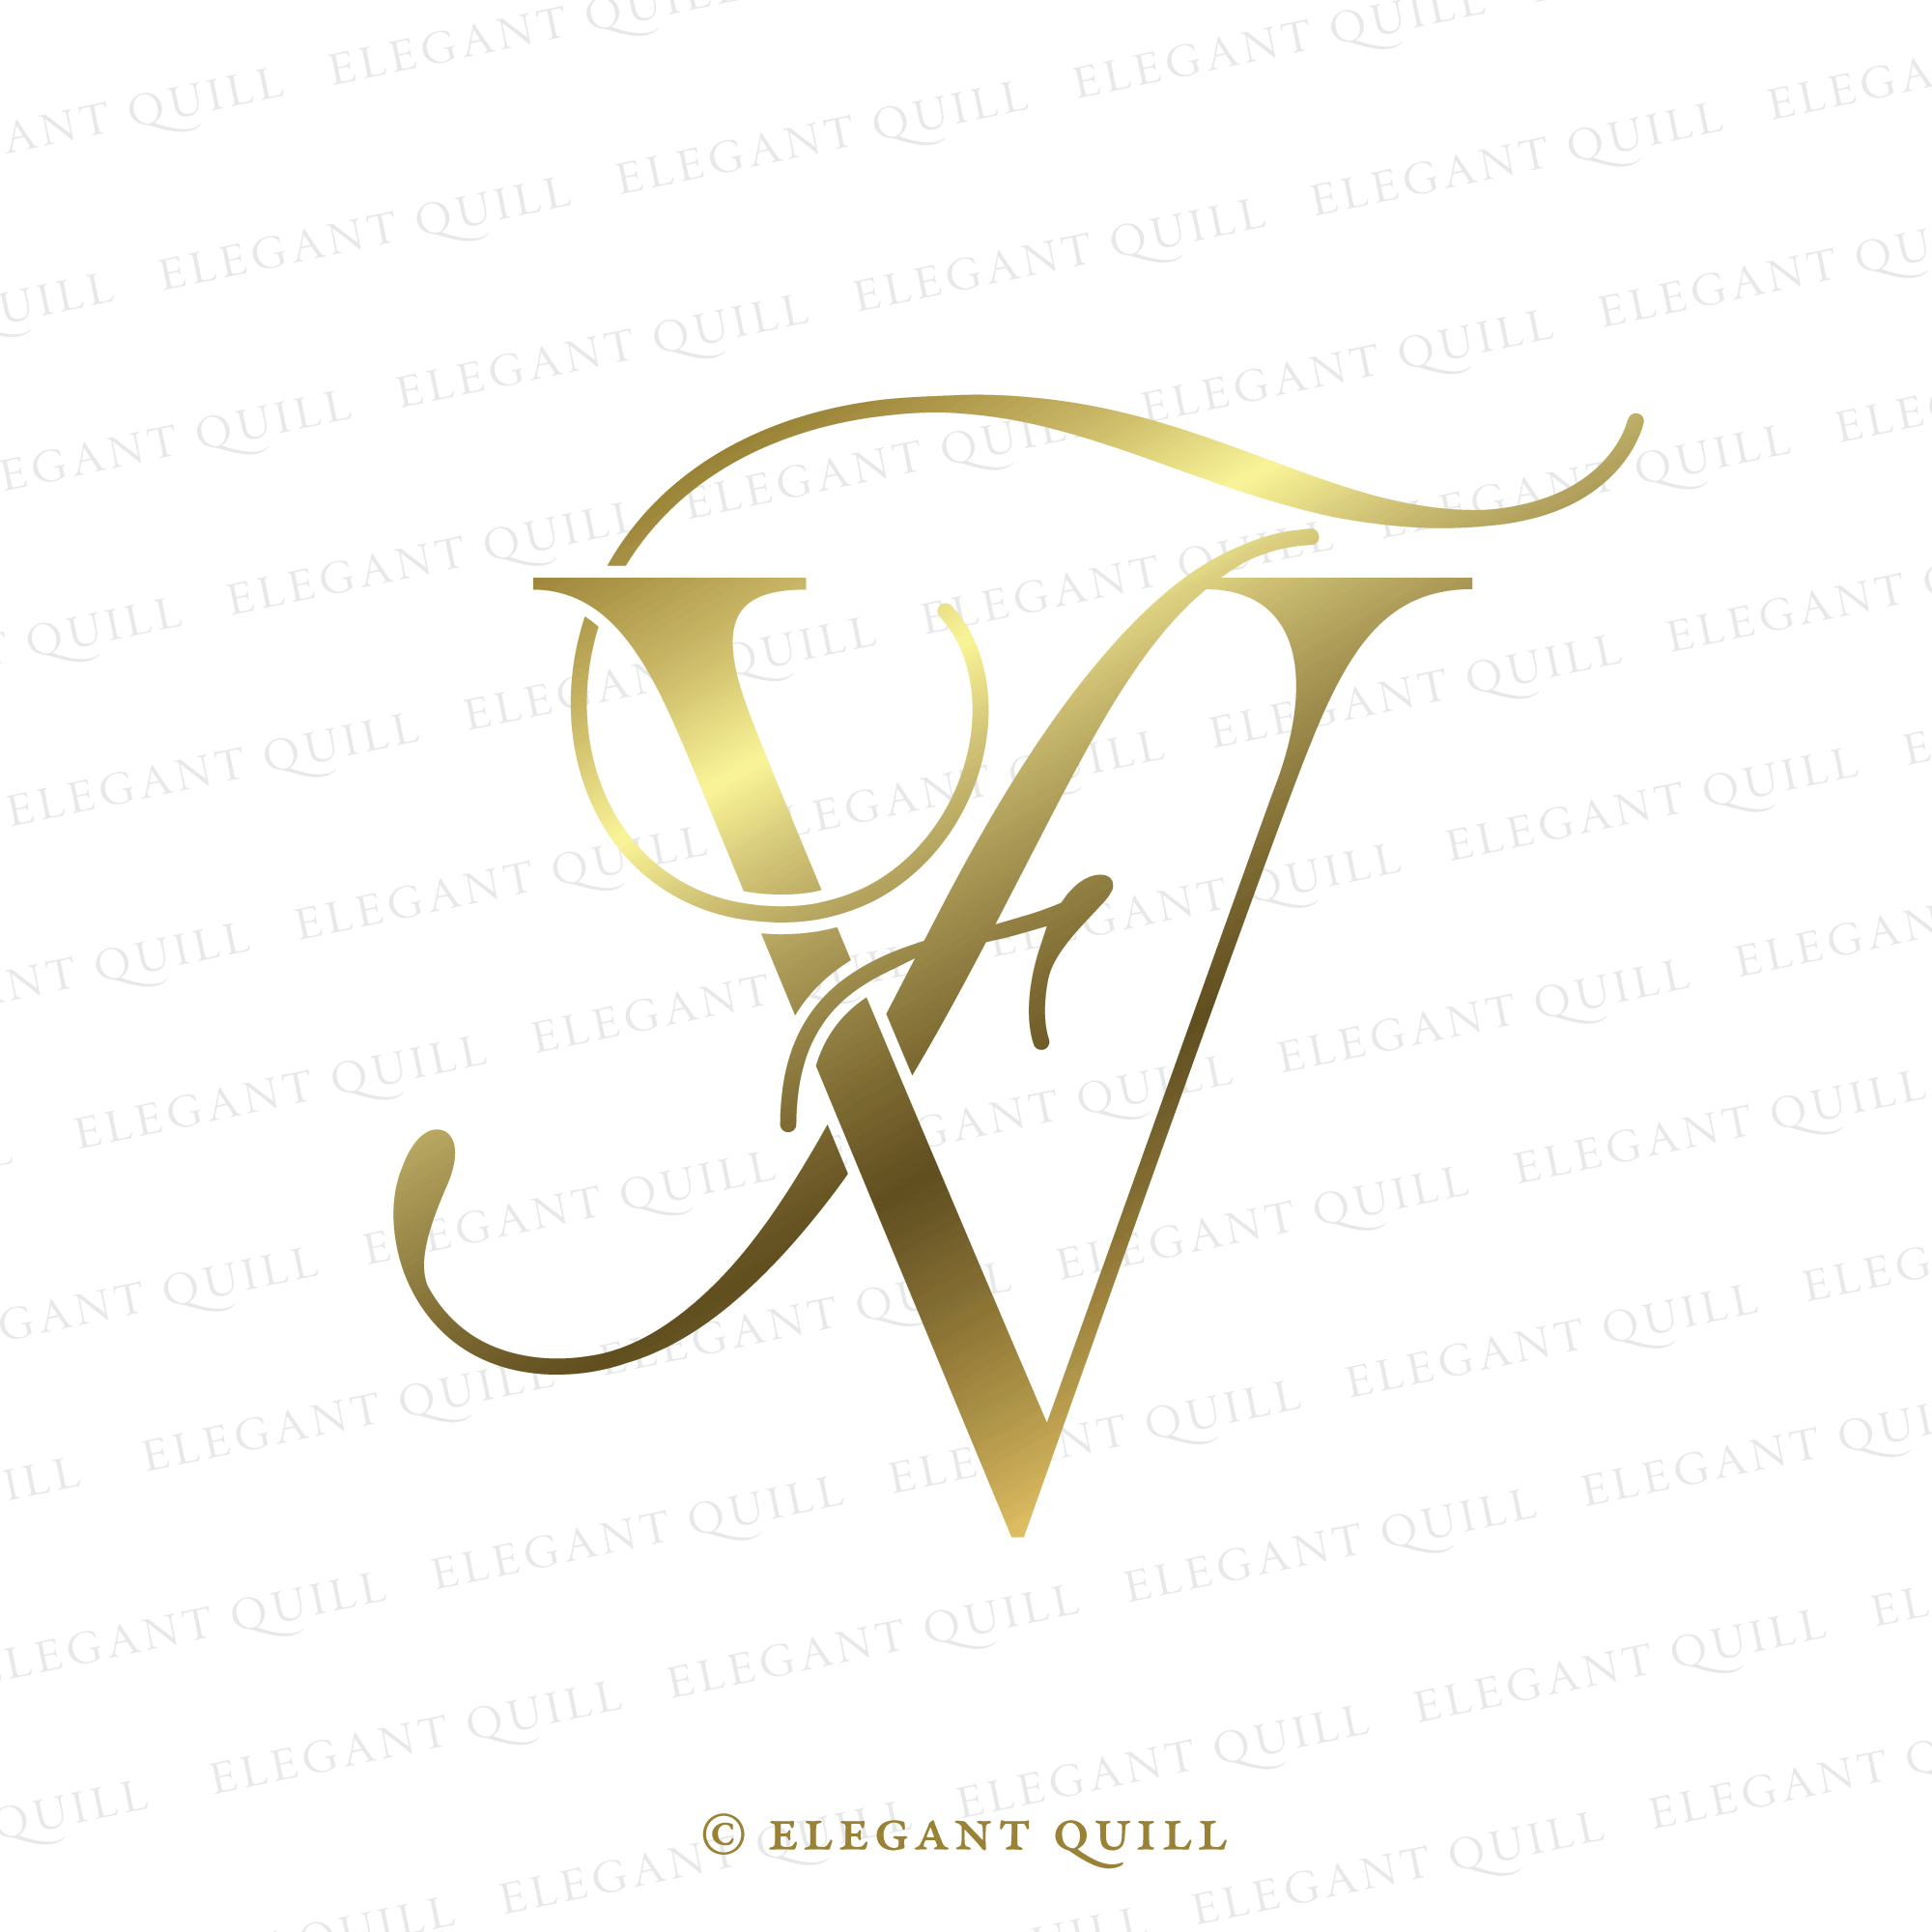 Fv Letter Type Logo Design Vector Template Abstract Letter Fv Logo Design  Stock Illustration - Download Image Now - iStock